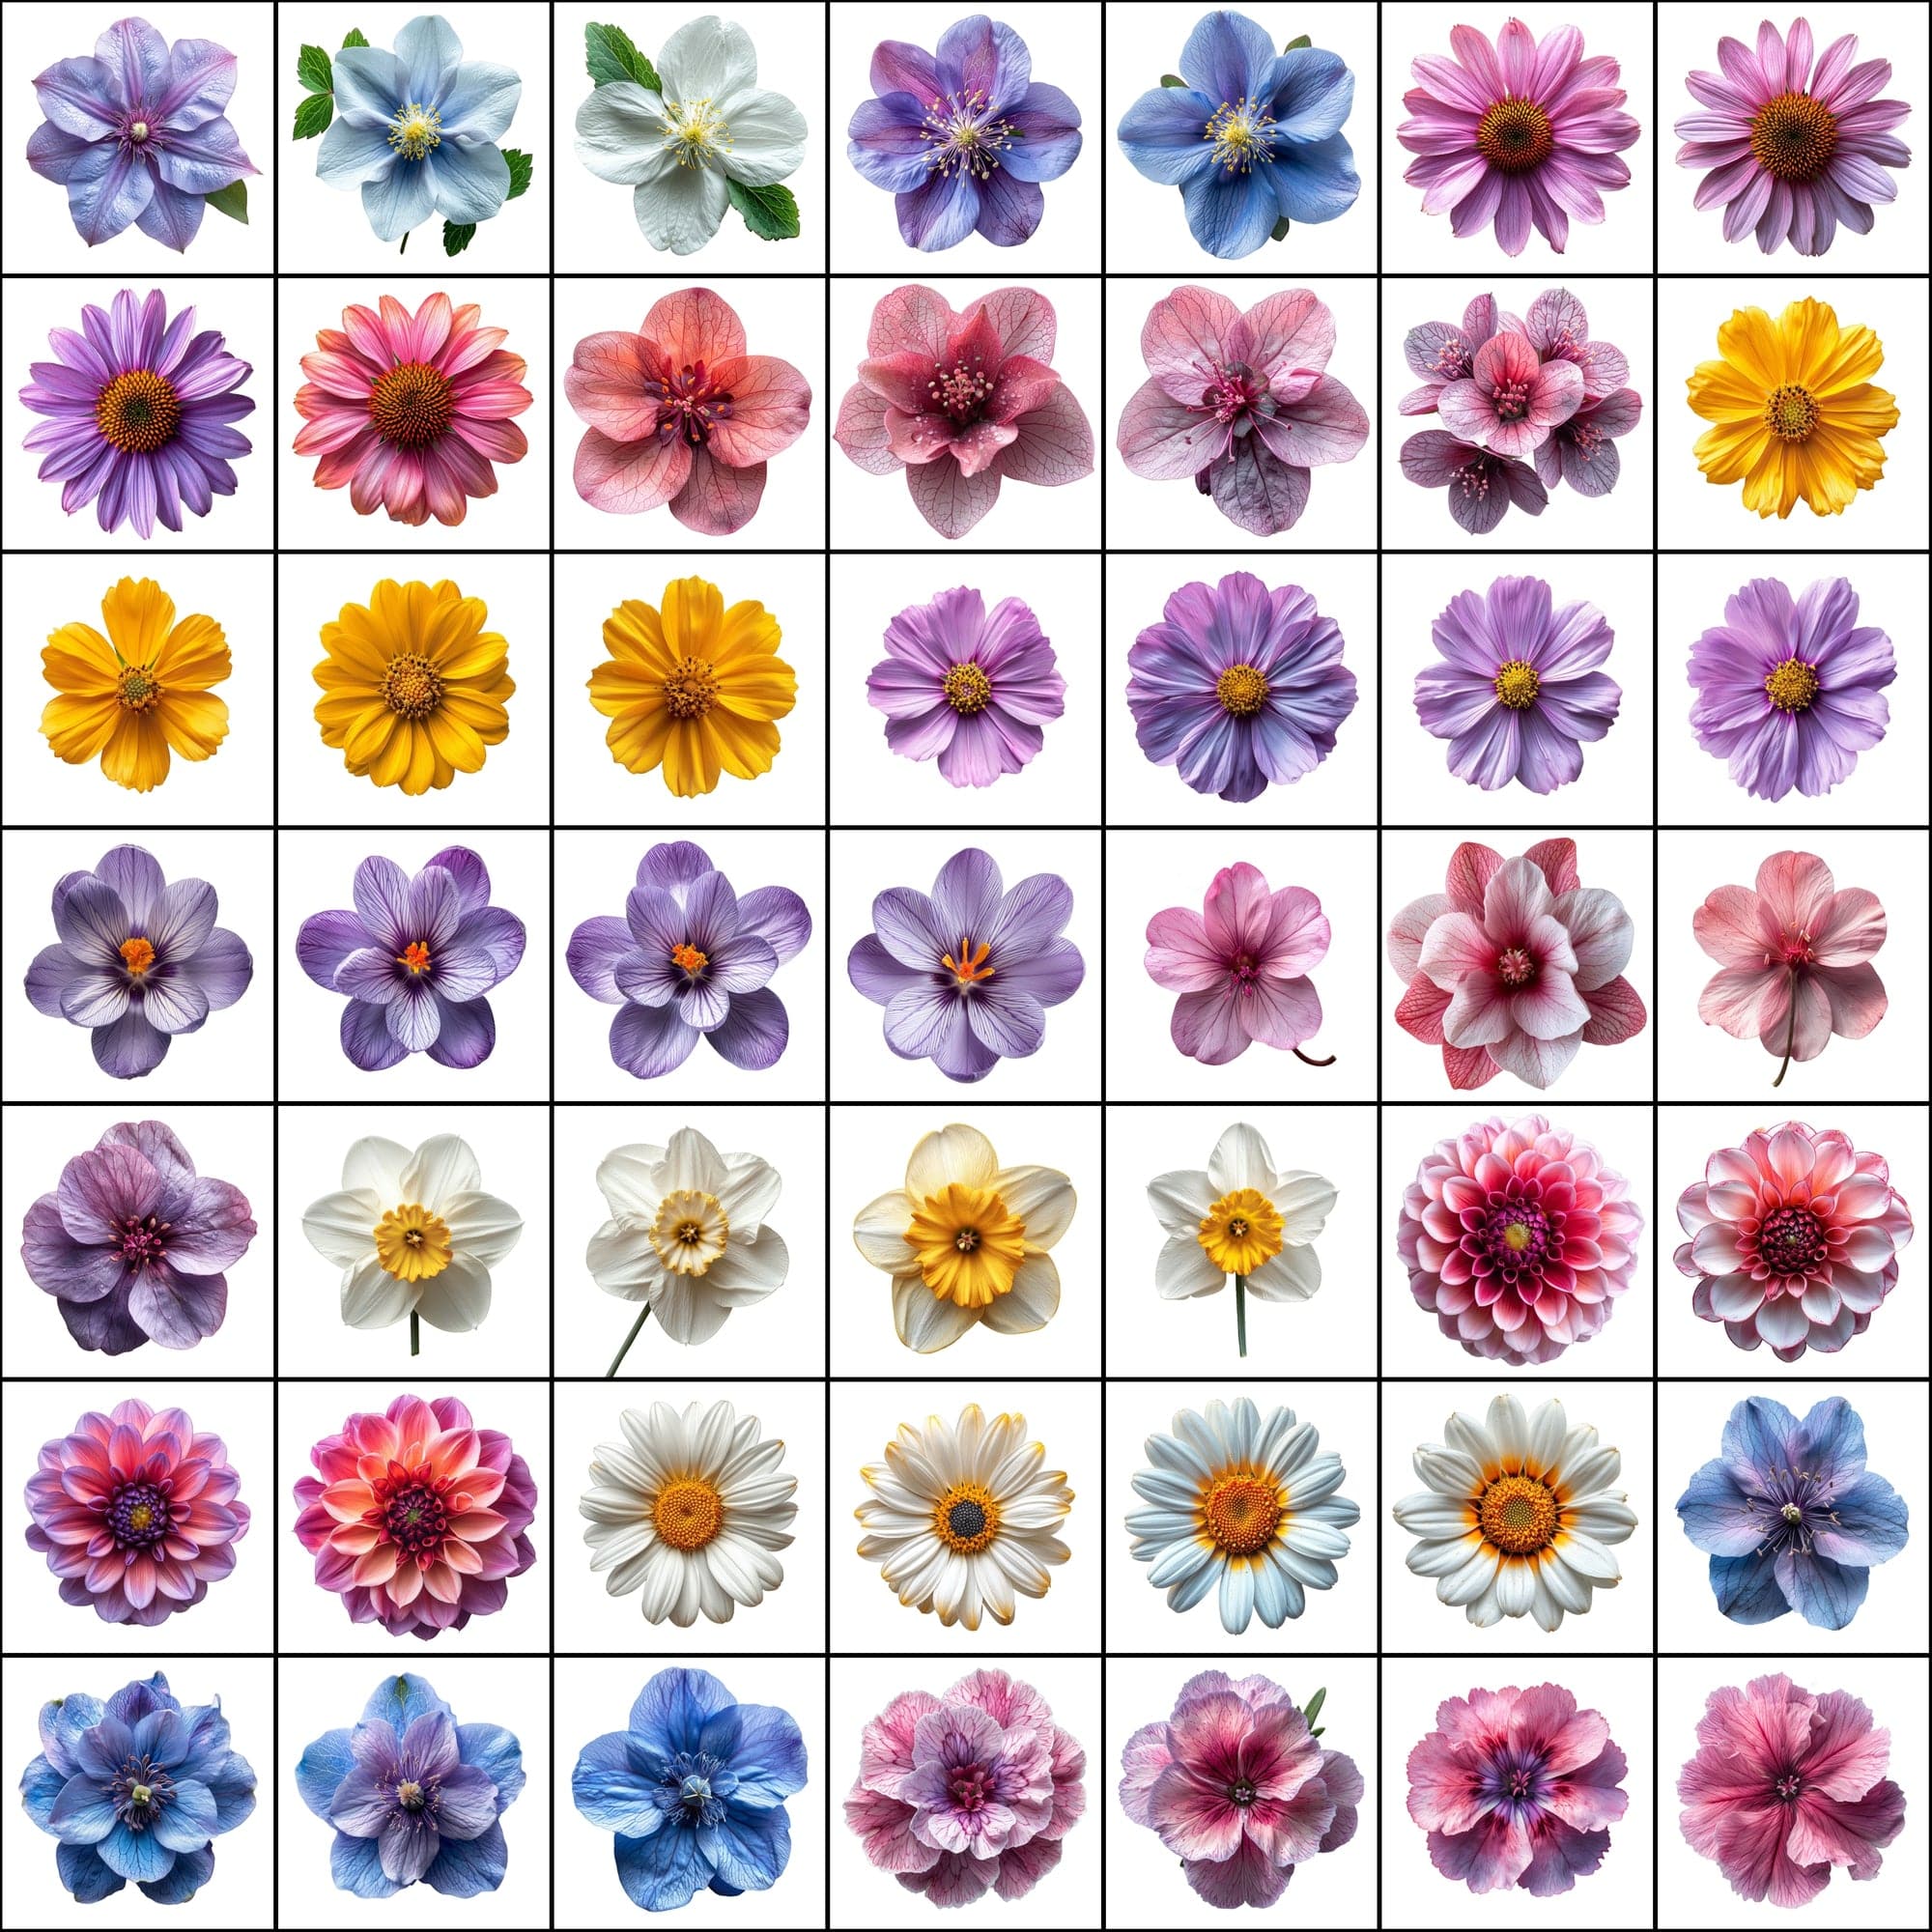 580 Top View Floral Images with Transparent Backgrounds Digital Download Sumobundle